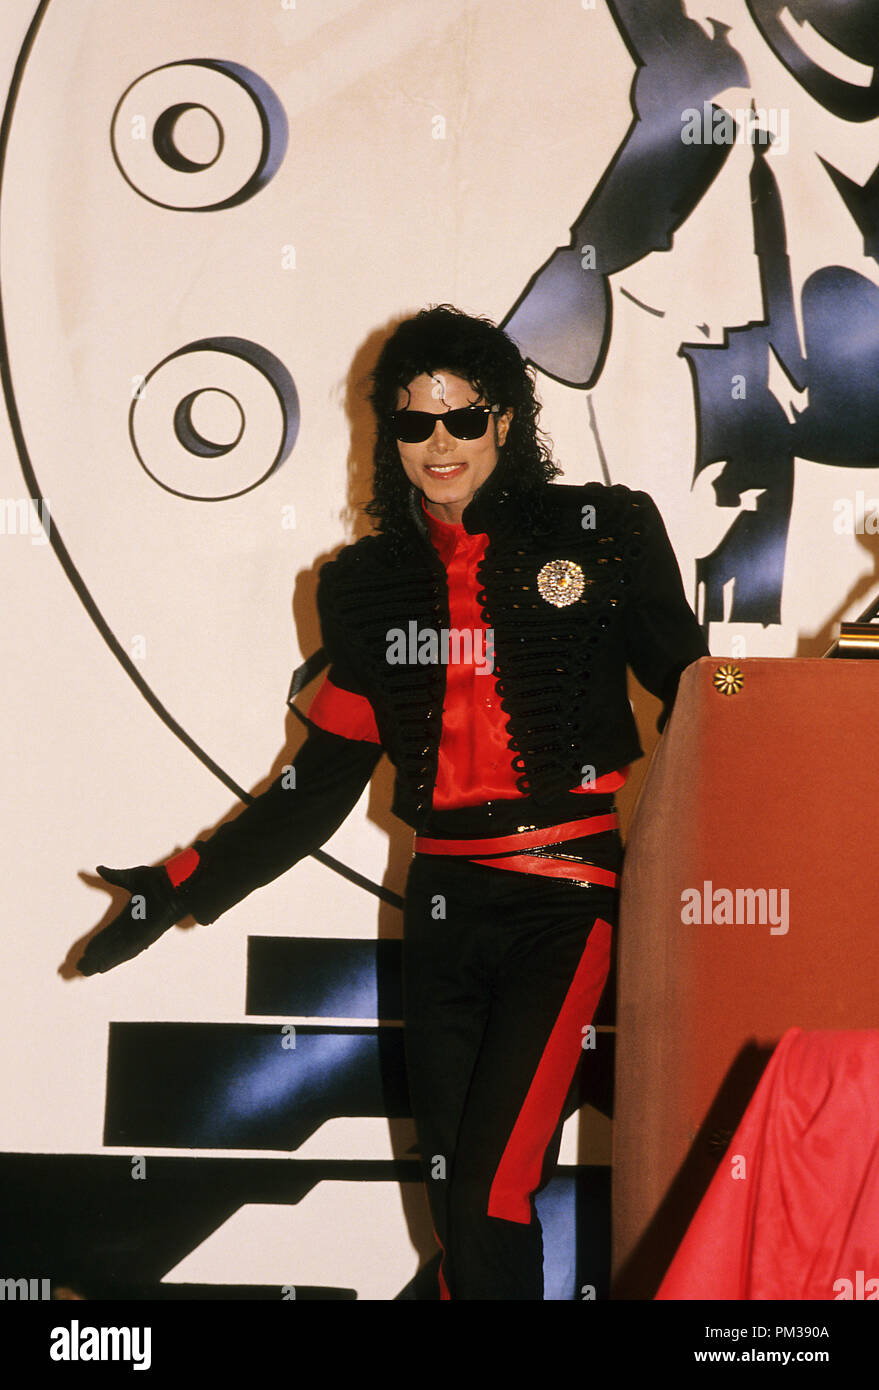 Michael Jackson, febbraio 1990. Riferimento al file # 1255 005CCR Foto Stock